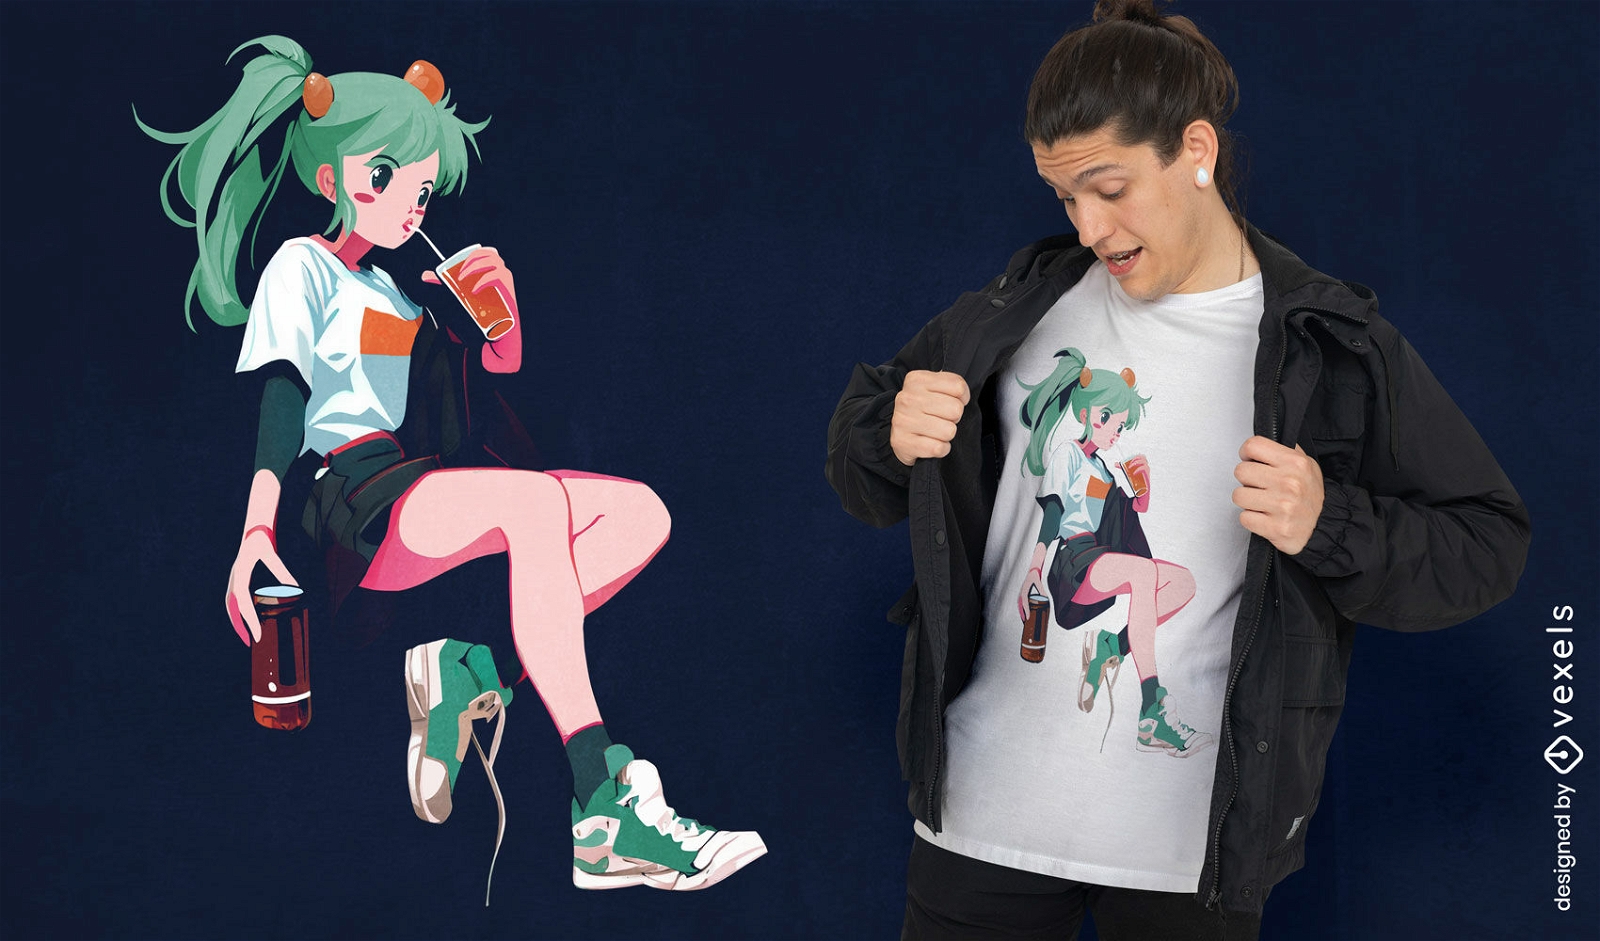 Diseño de camiseta de chica anime bebiendo refrescos